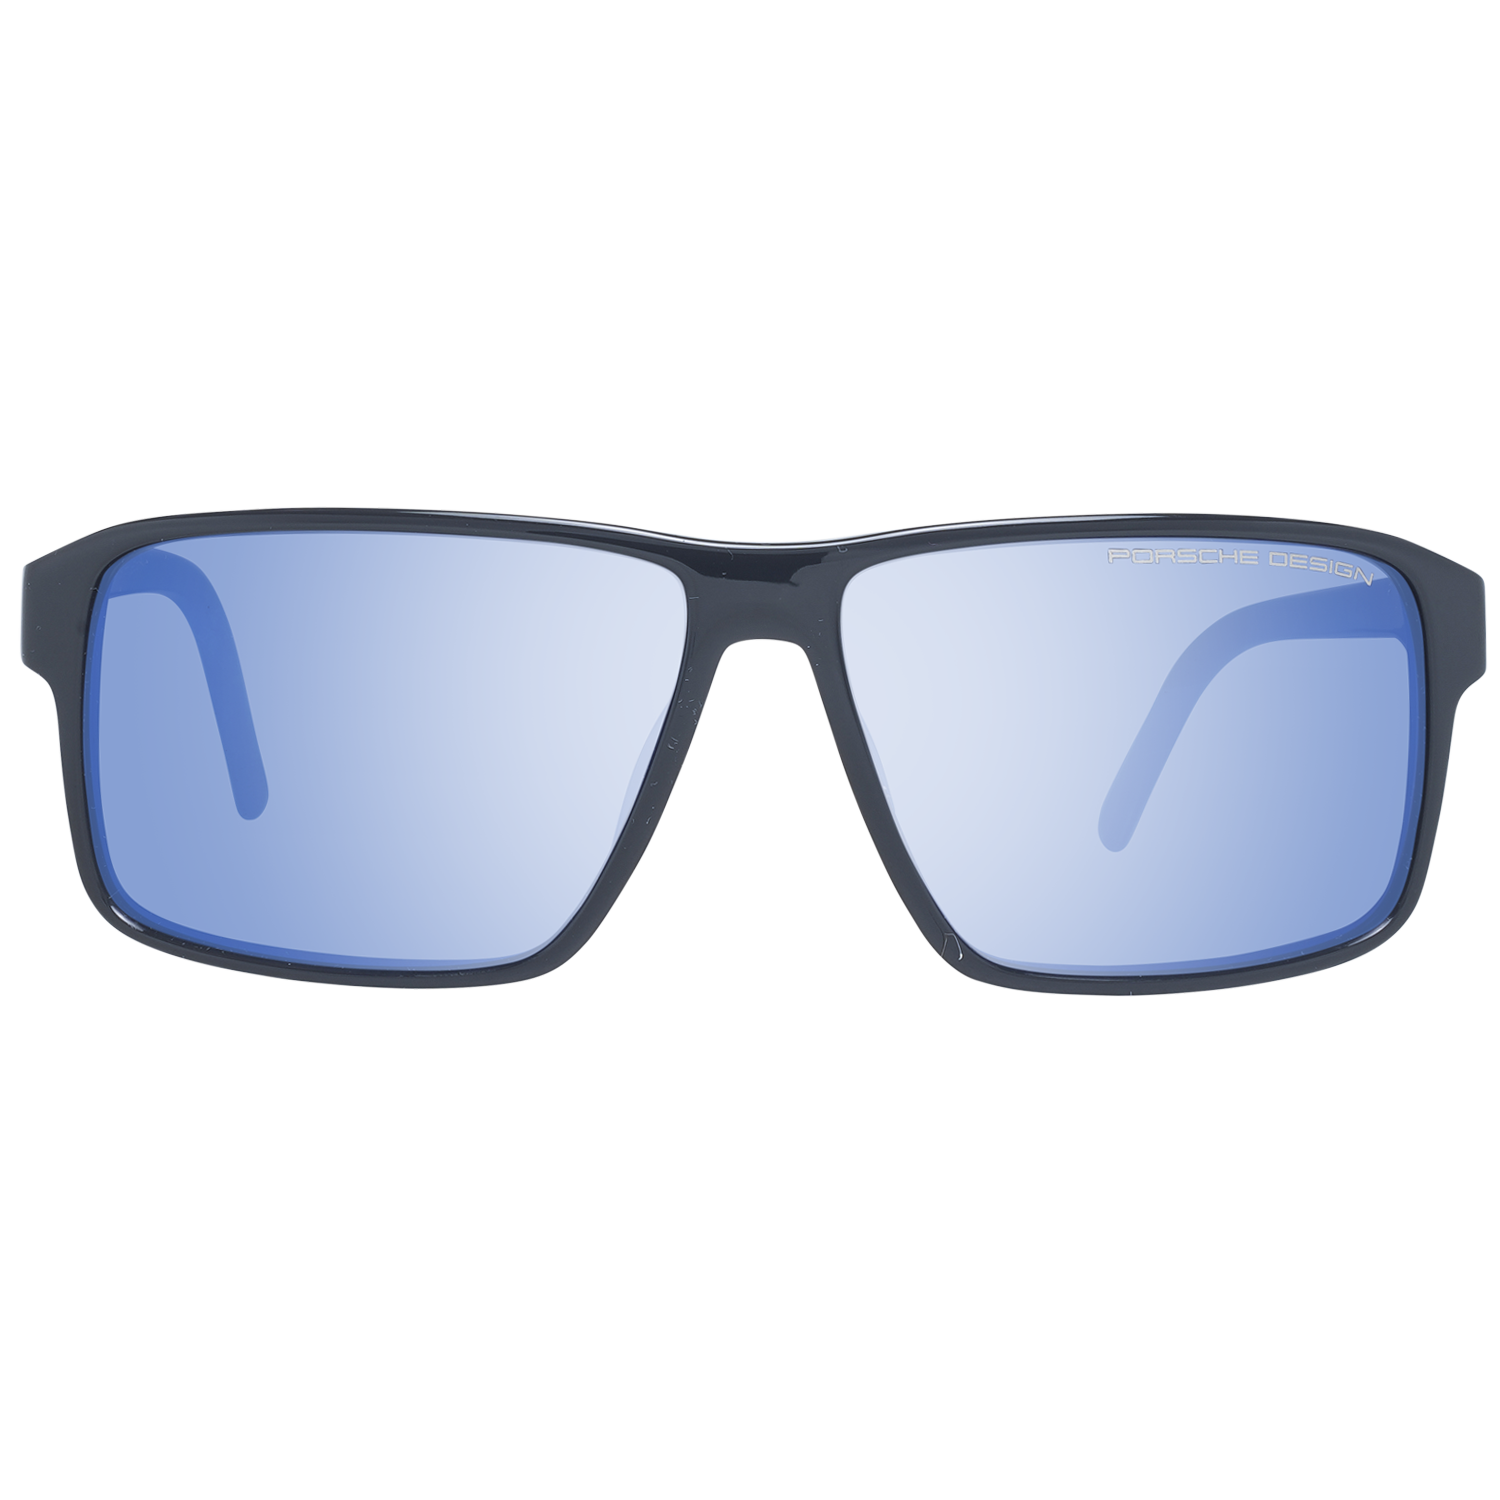 Porsche Design Sunglasses Porsche Design Sunglasses P8634 C 60 Mirrored Eyeglasses Eyewear UK USA Australia 